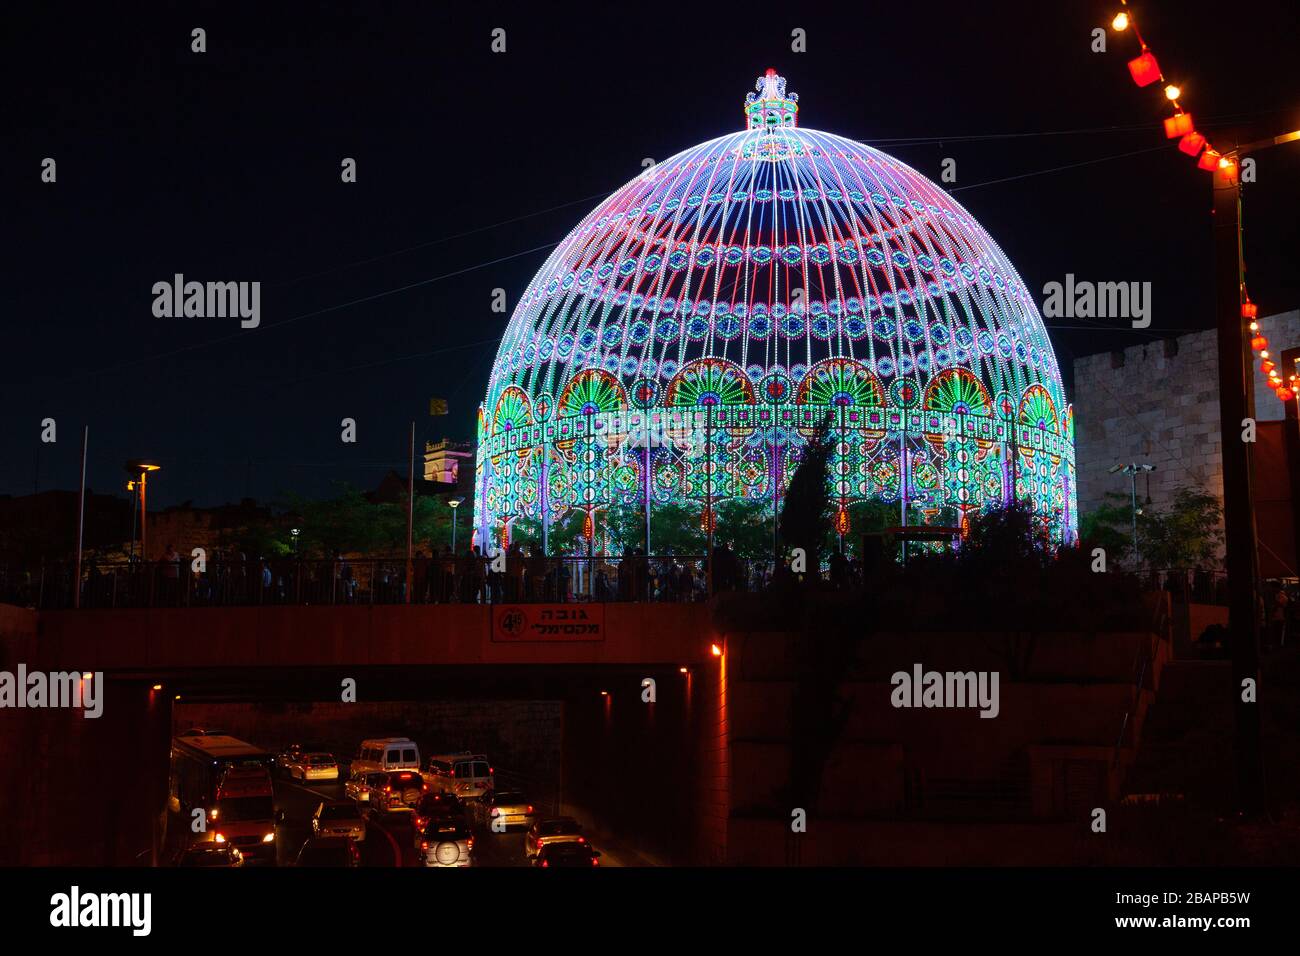 La cupola illuminata a Gerusalemme Festival della luce - Cultura d'Israele Foto Stock